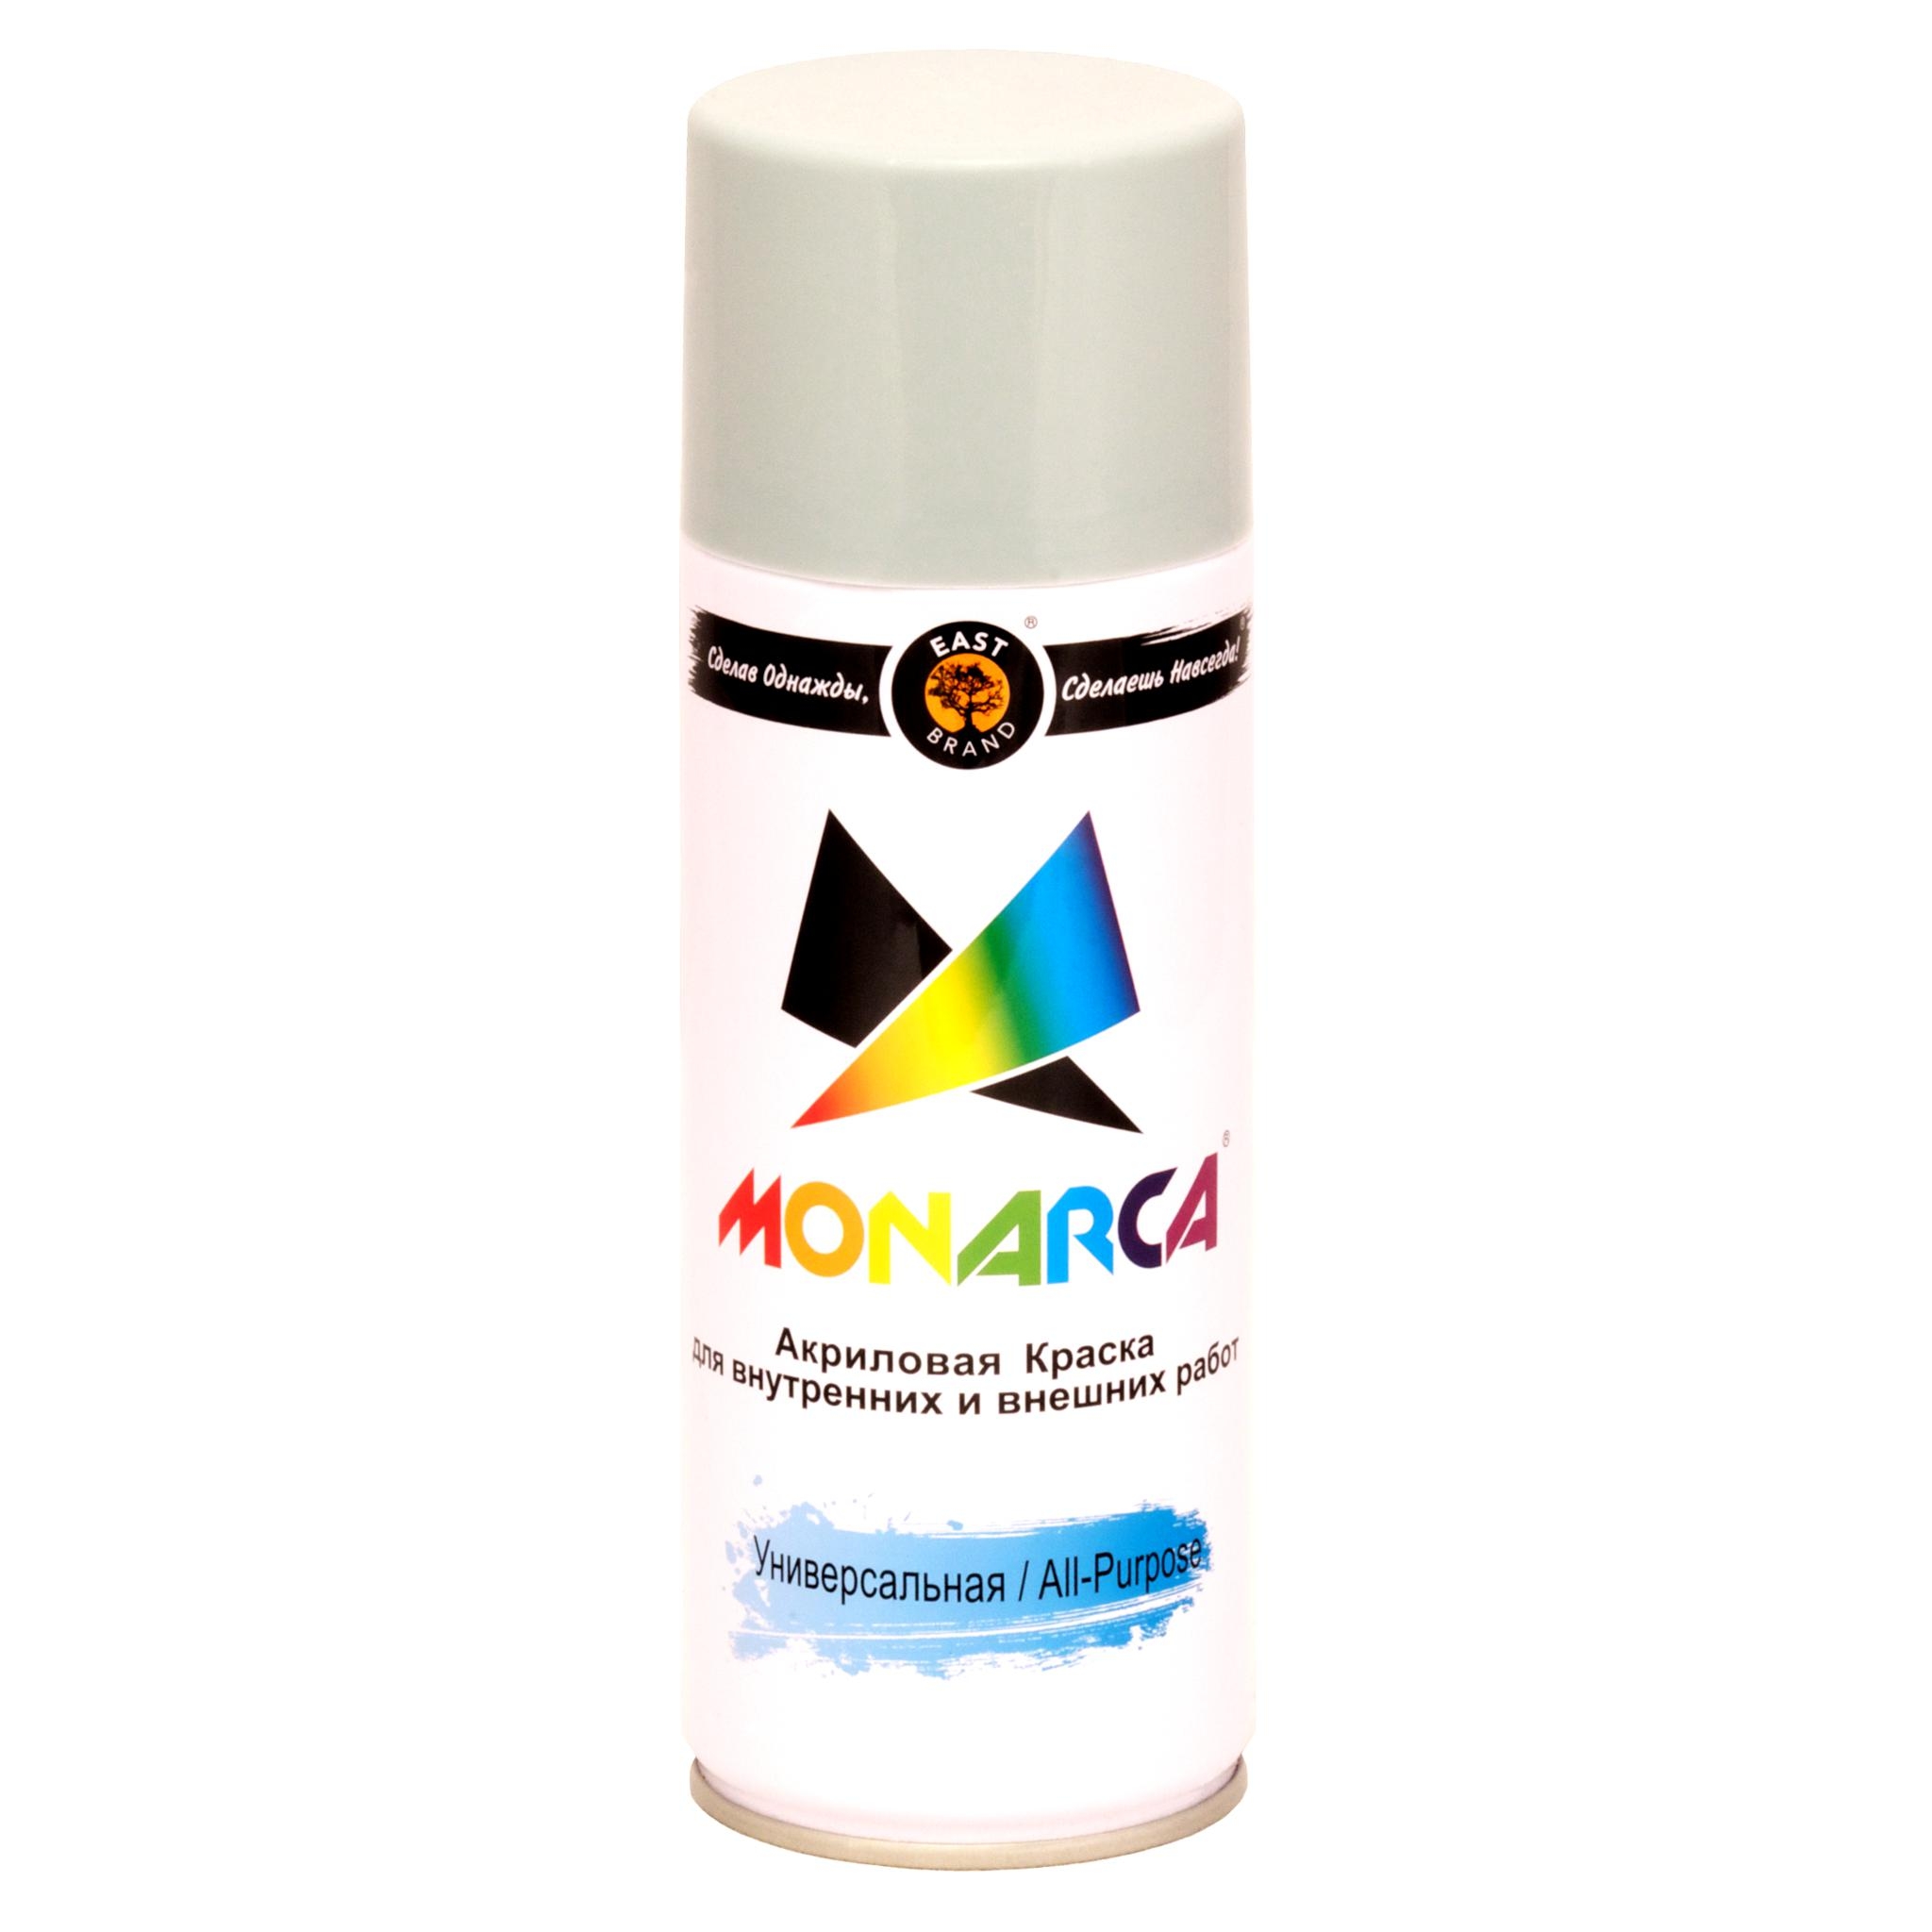 Аэрозольная краска MONARCA 17004 RAL7004 520 мл сигнальный серая термостойкая аэрозольная краска monarca